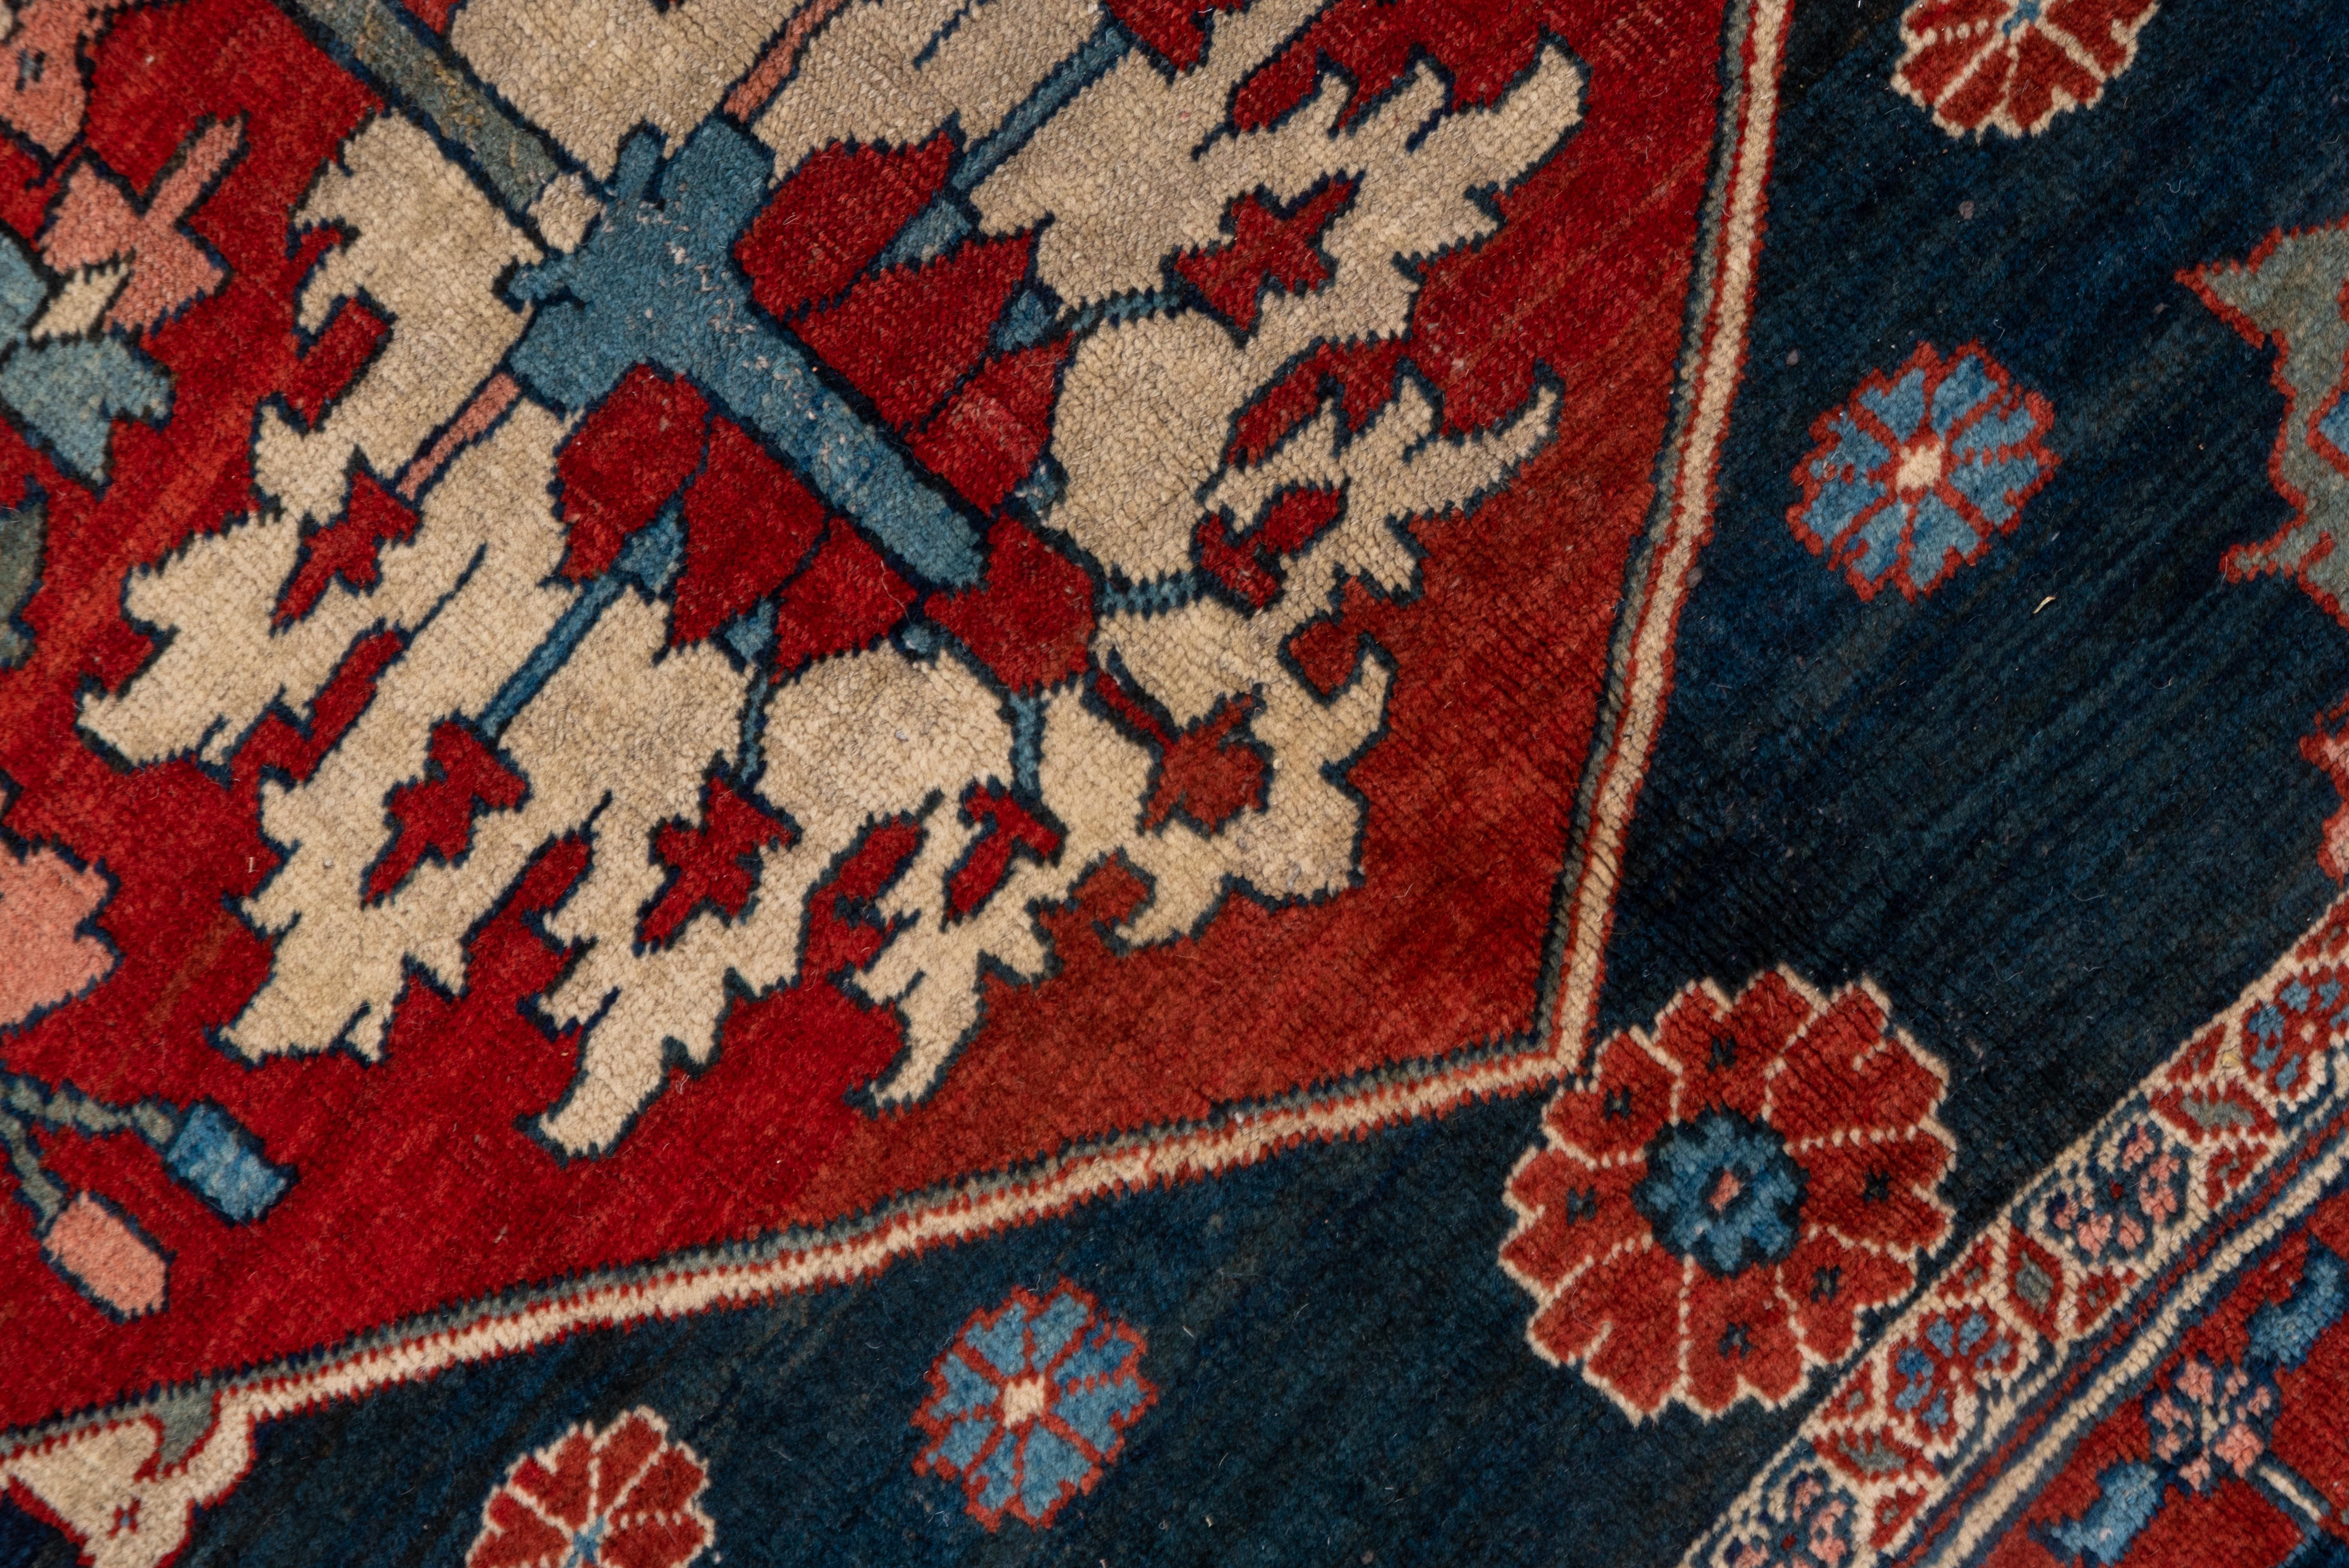 Early 20th Century Antique Persian Serapi Carpet, circa 1900s